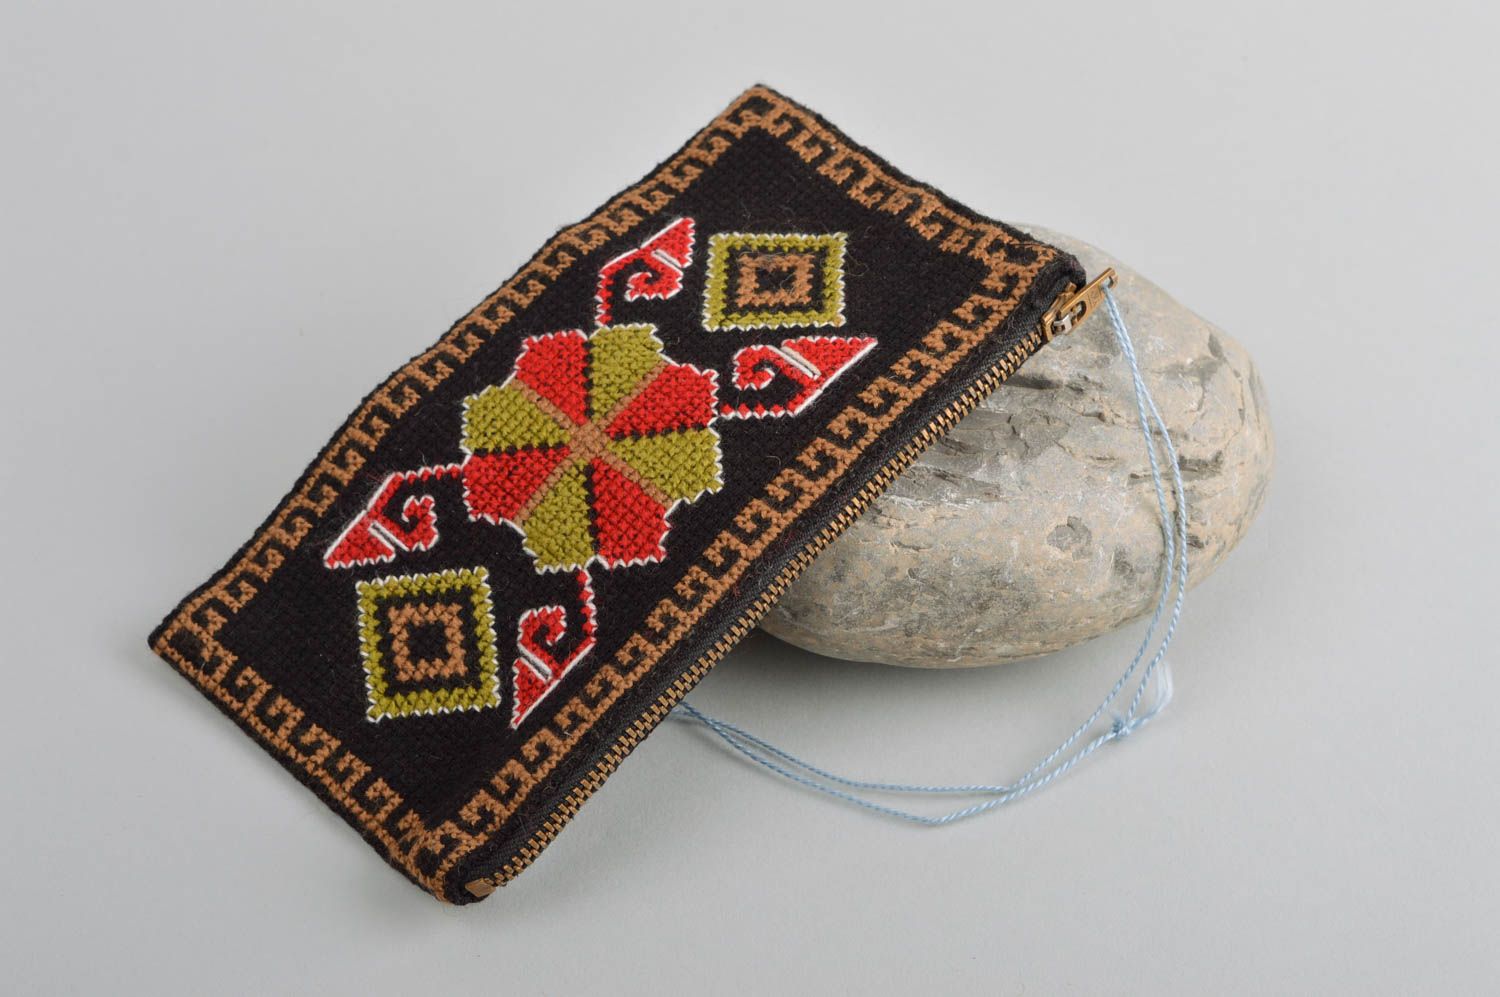 Beautiful handmade fabric phone case fashion gadget accessories gift ideas photo 1